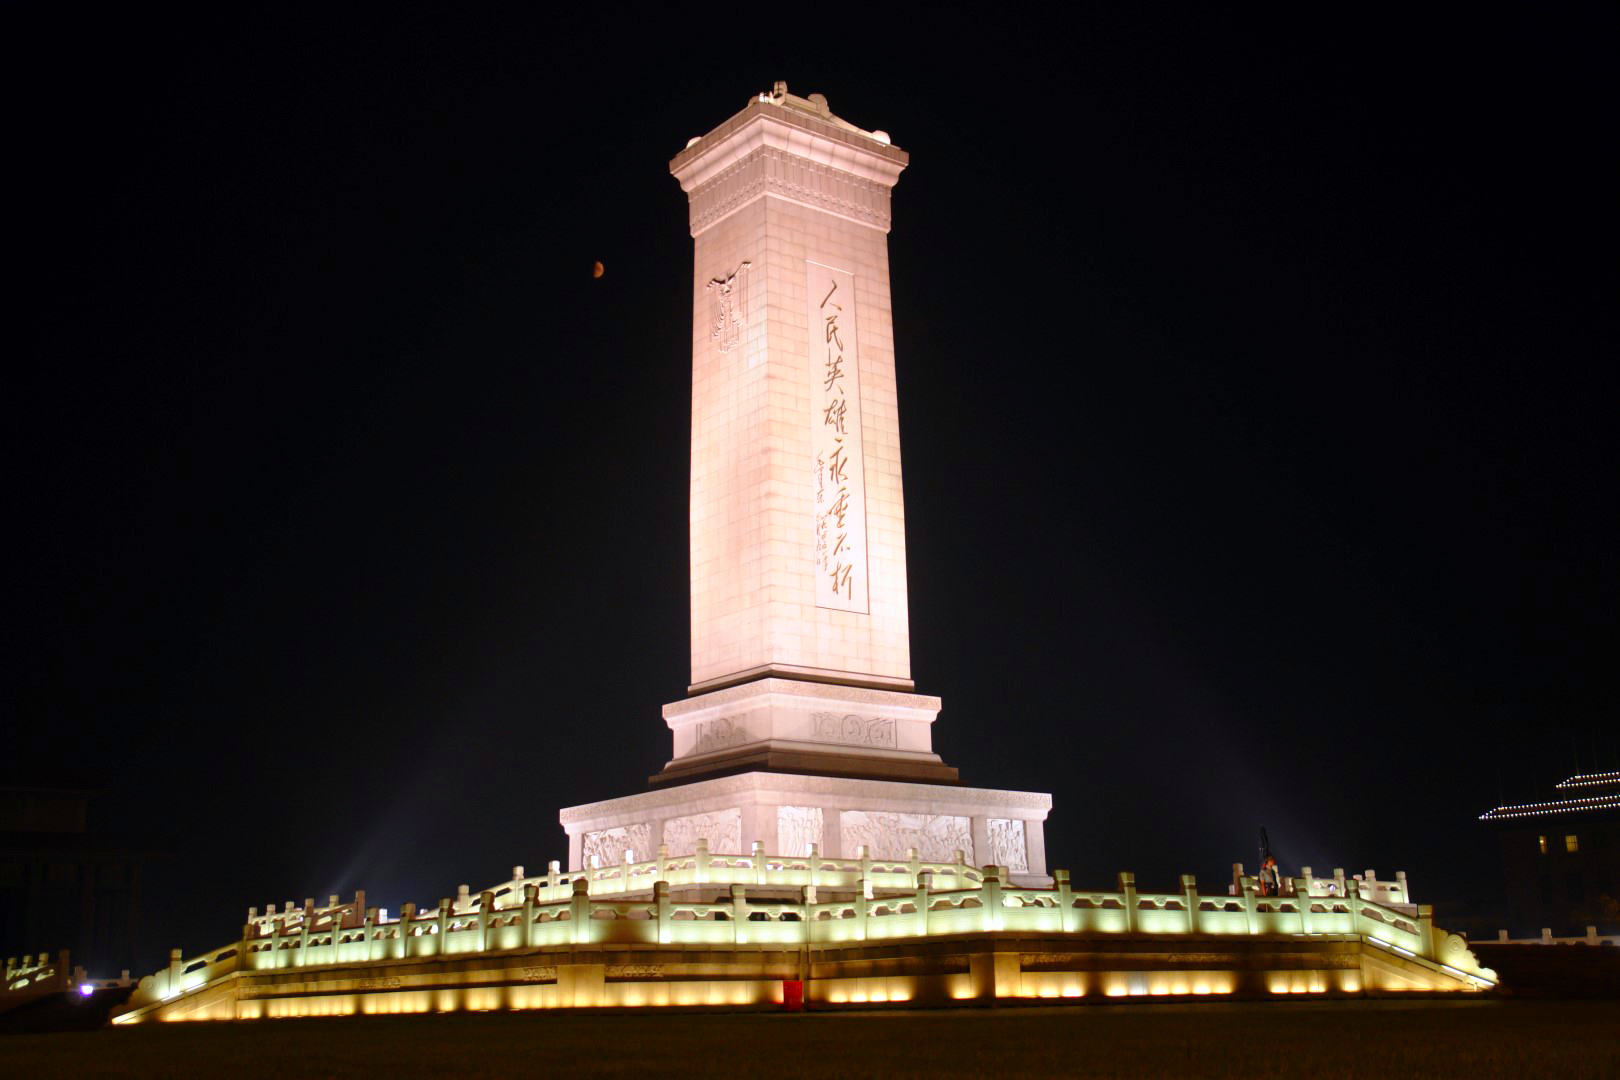 Qué ver en Pekín, China: Plaza de Tian’anmen en Pekin / Beijing - China